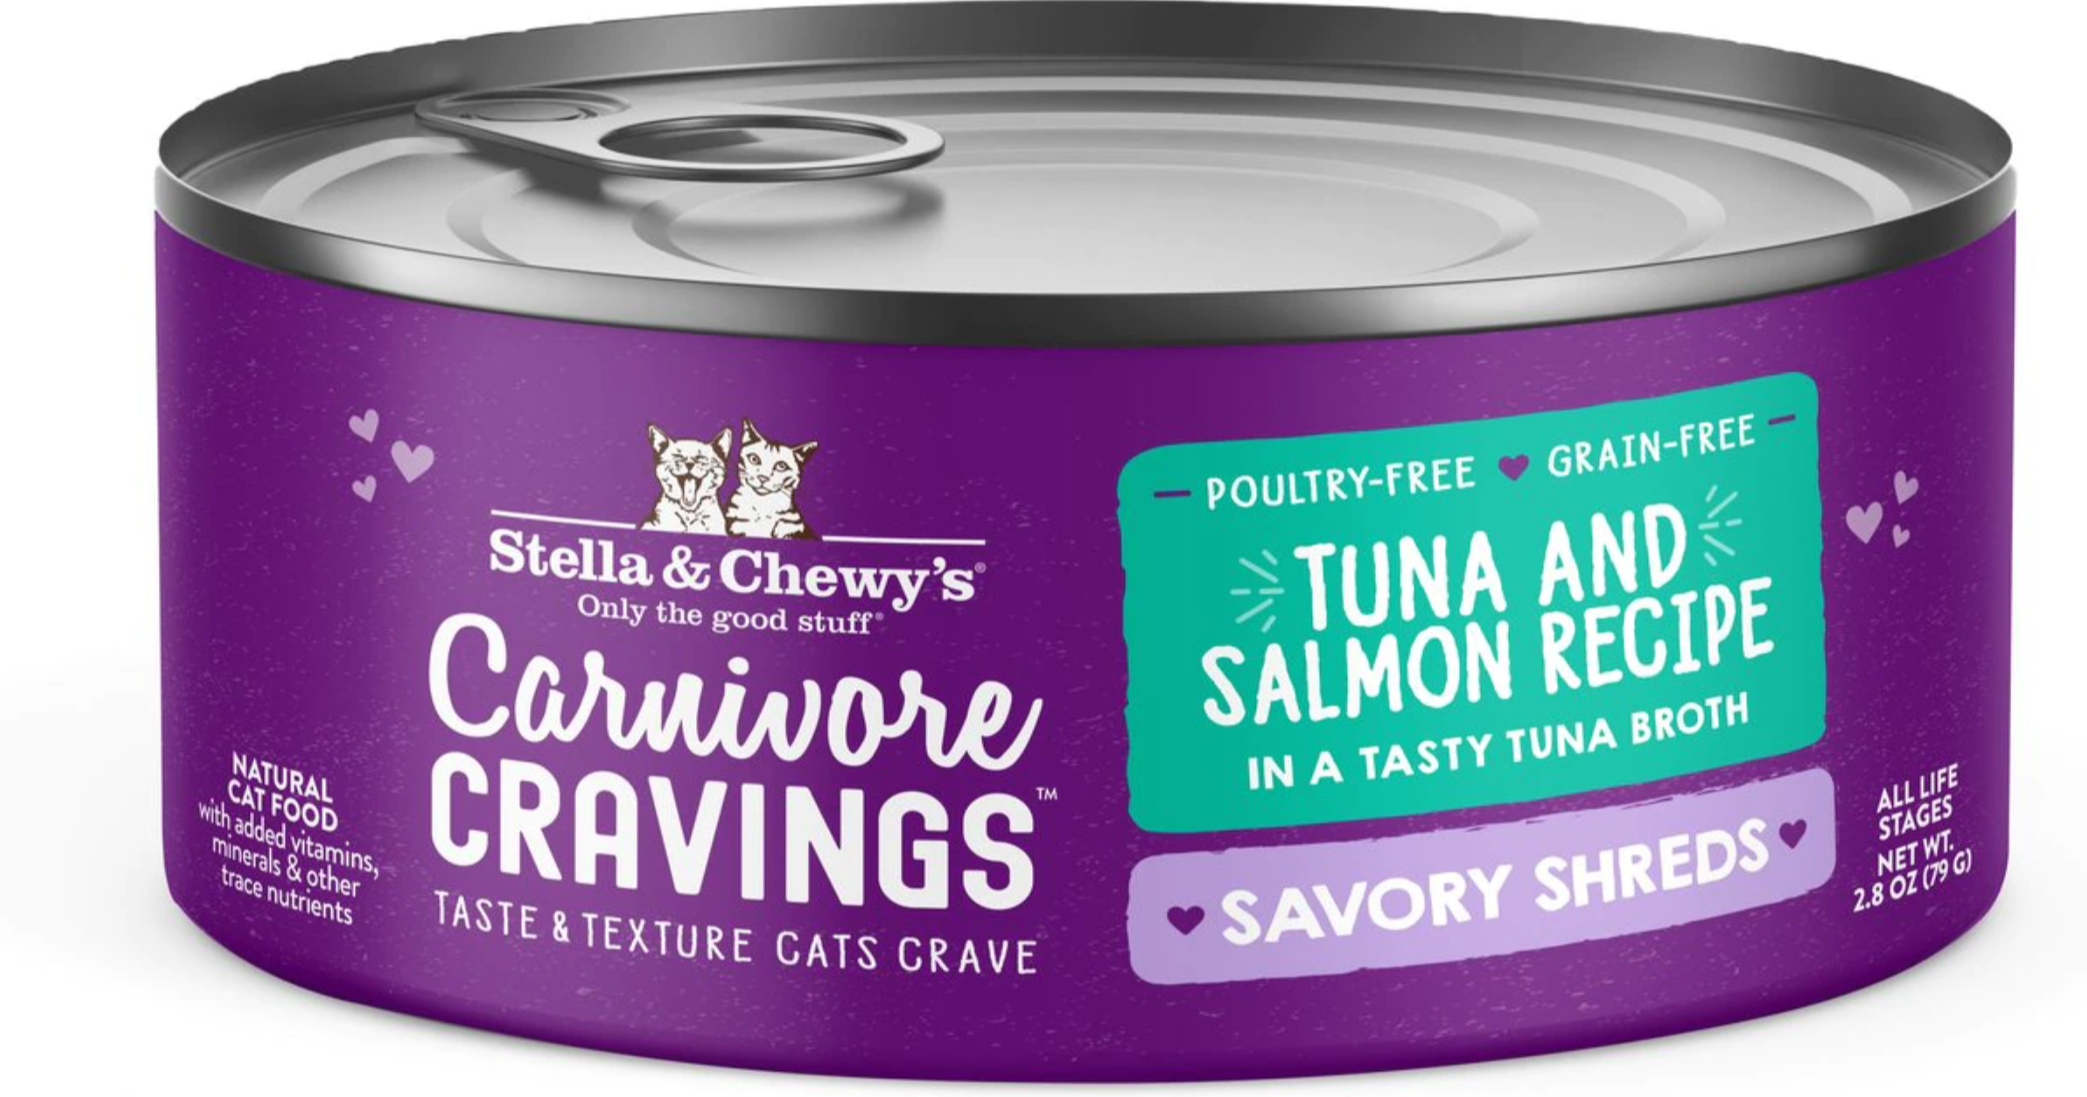 Stella & Chewy's Carnivore Cravings Savory Shreds Tuna & Salmon Recipe - 2.8oz Can